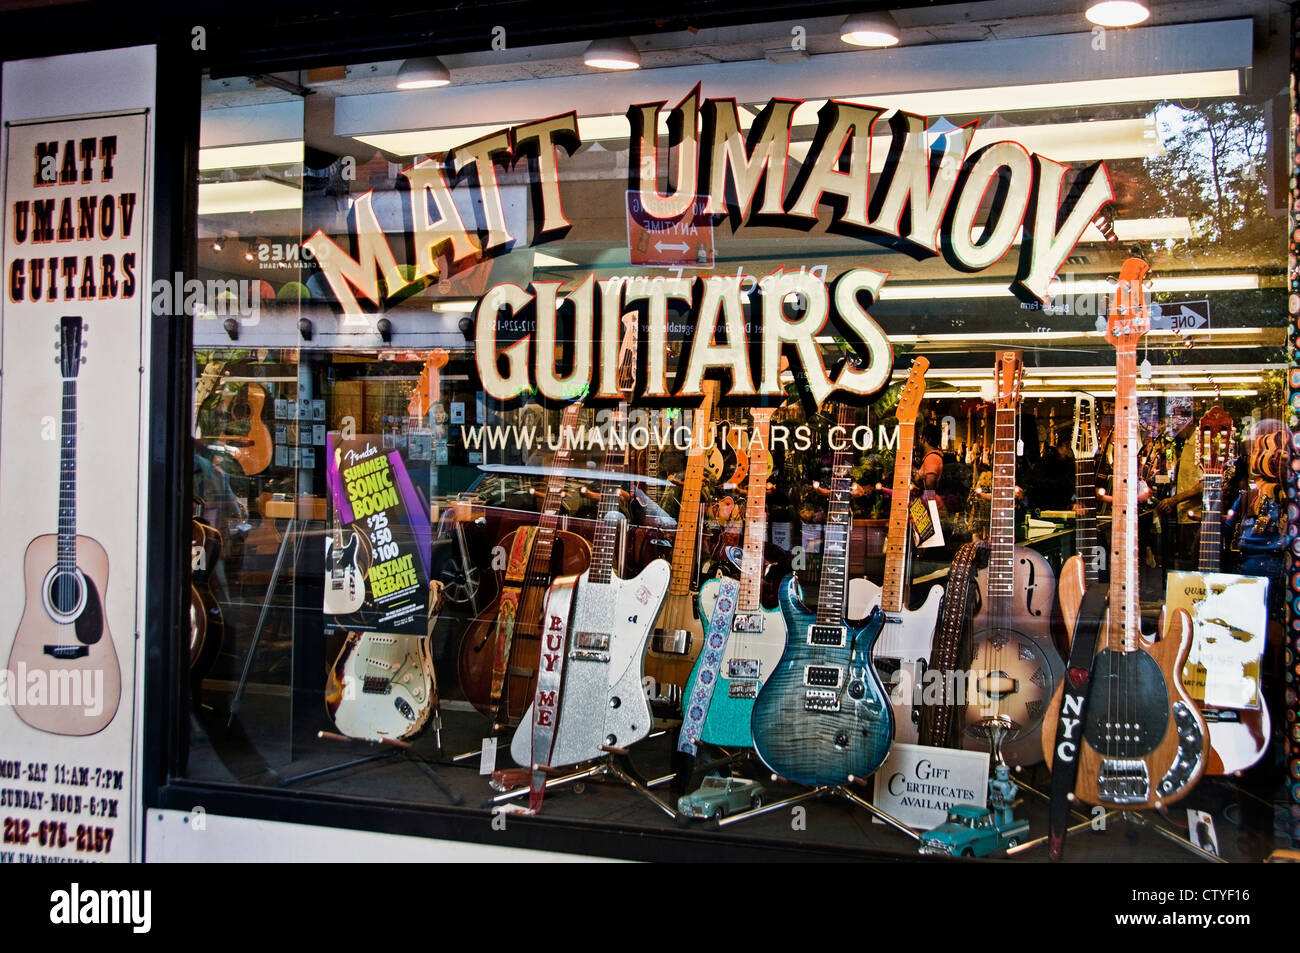 West Village Music Shop Store Matt Umanon Guitars Manhattan New York United States of America Banque D'Images